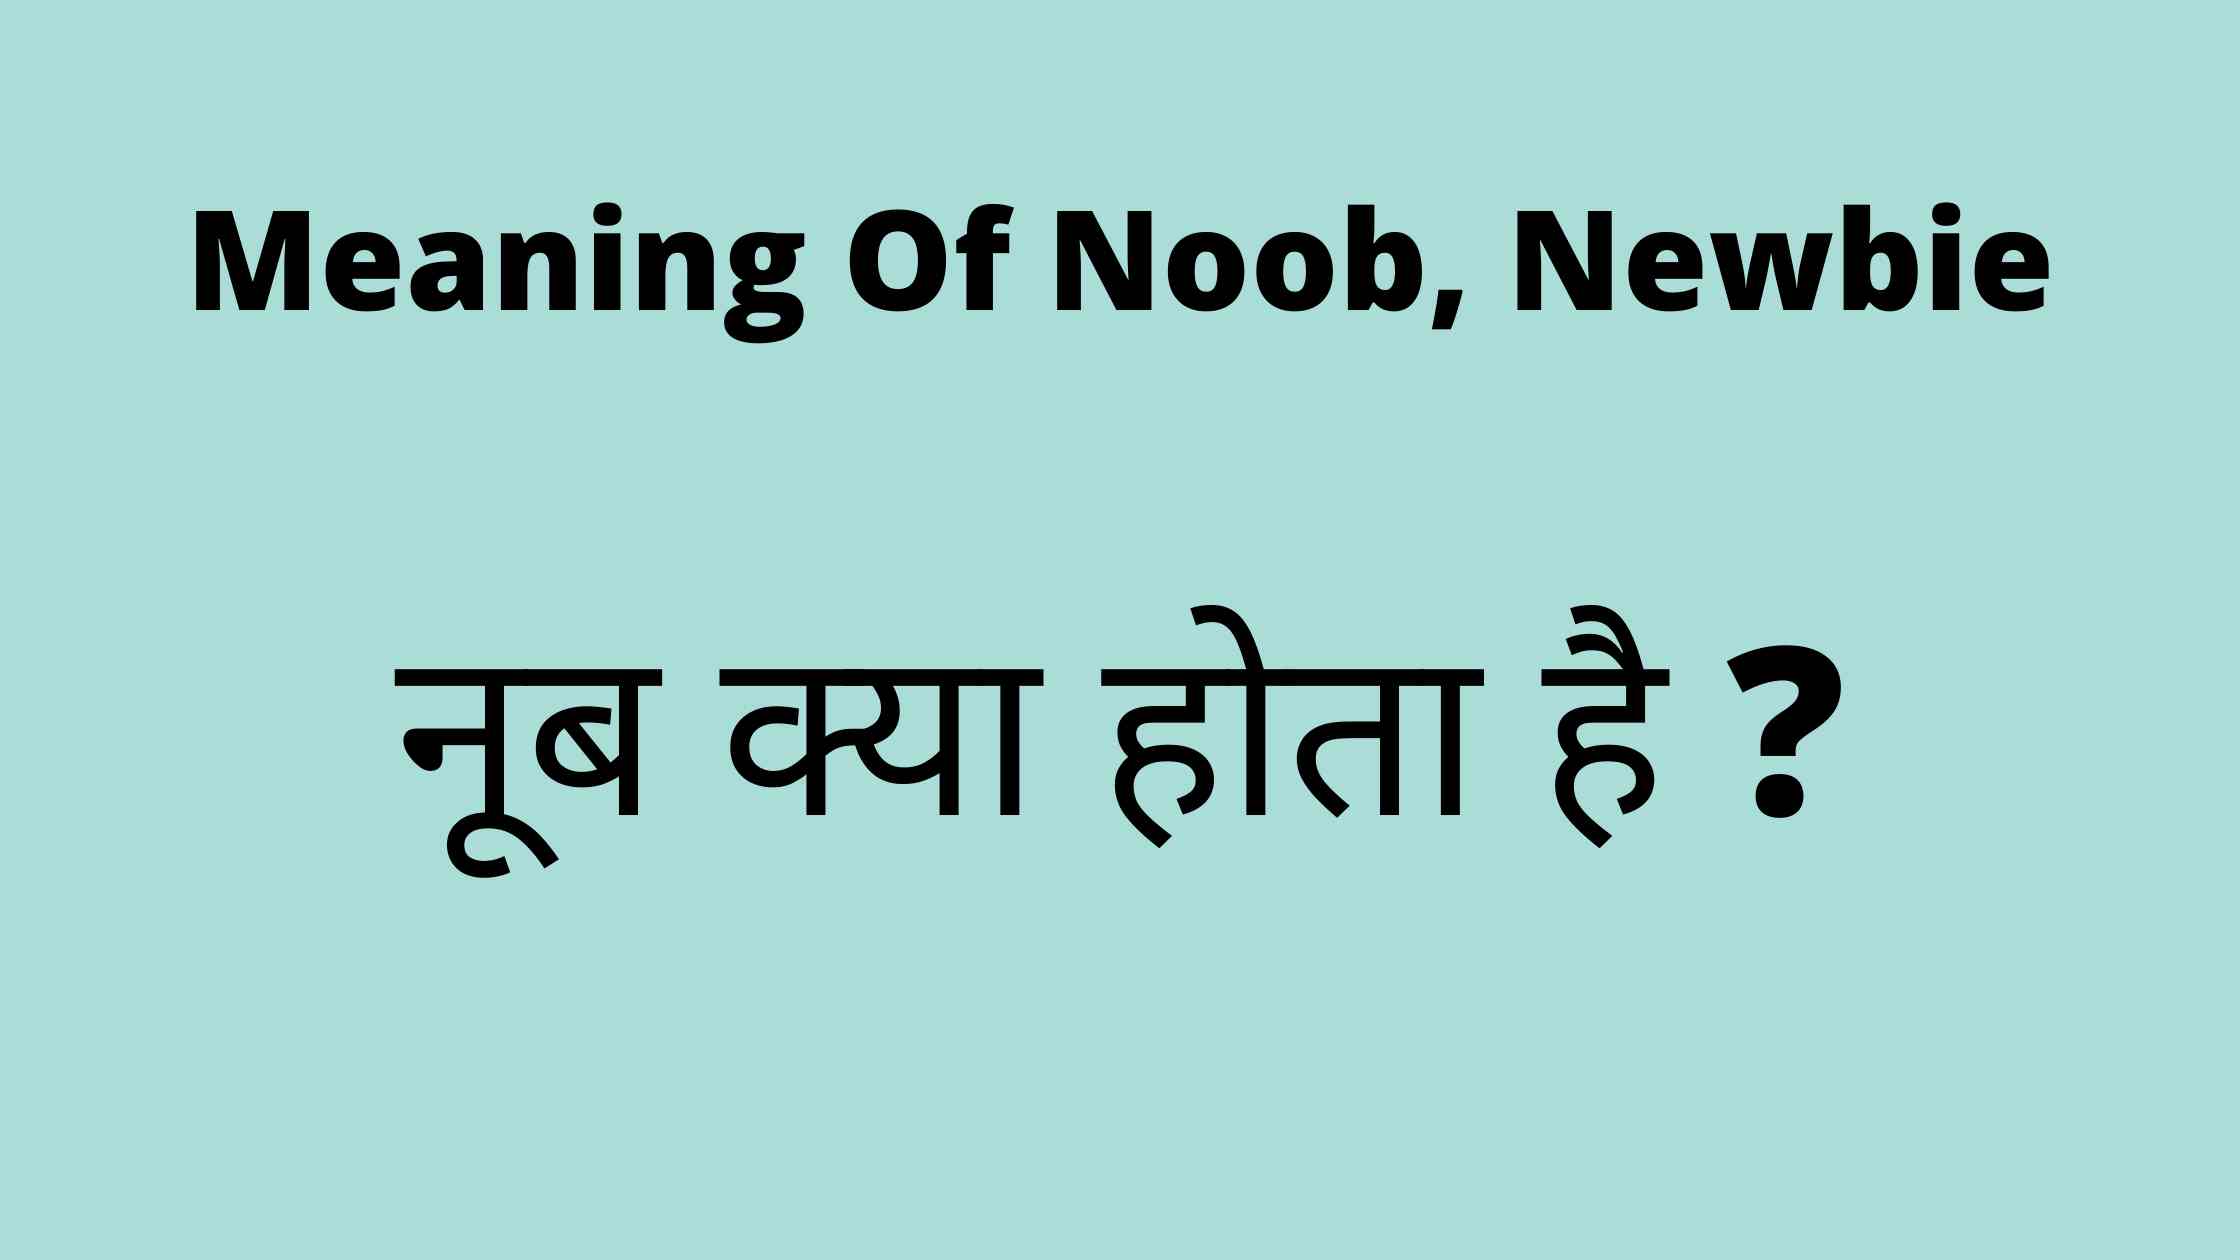 Newbie, newb, noob, nub meaning in hindi, full form